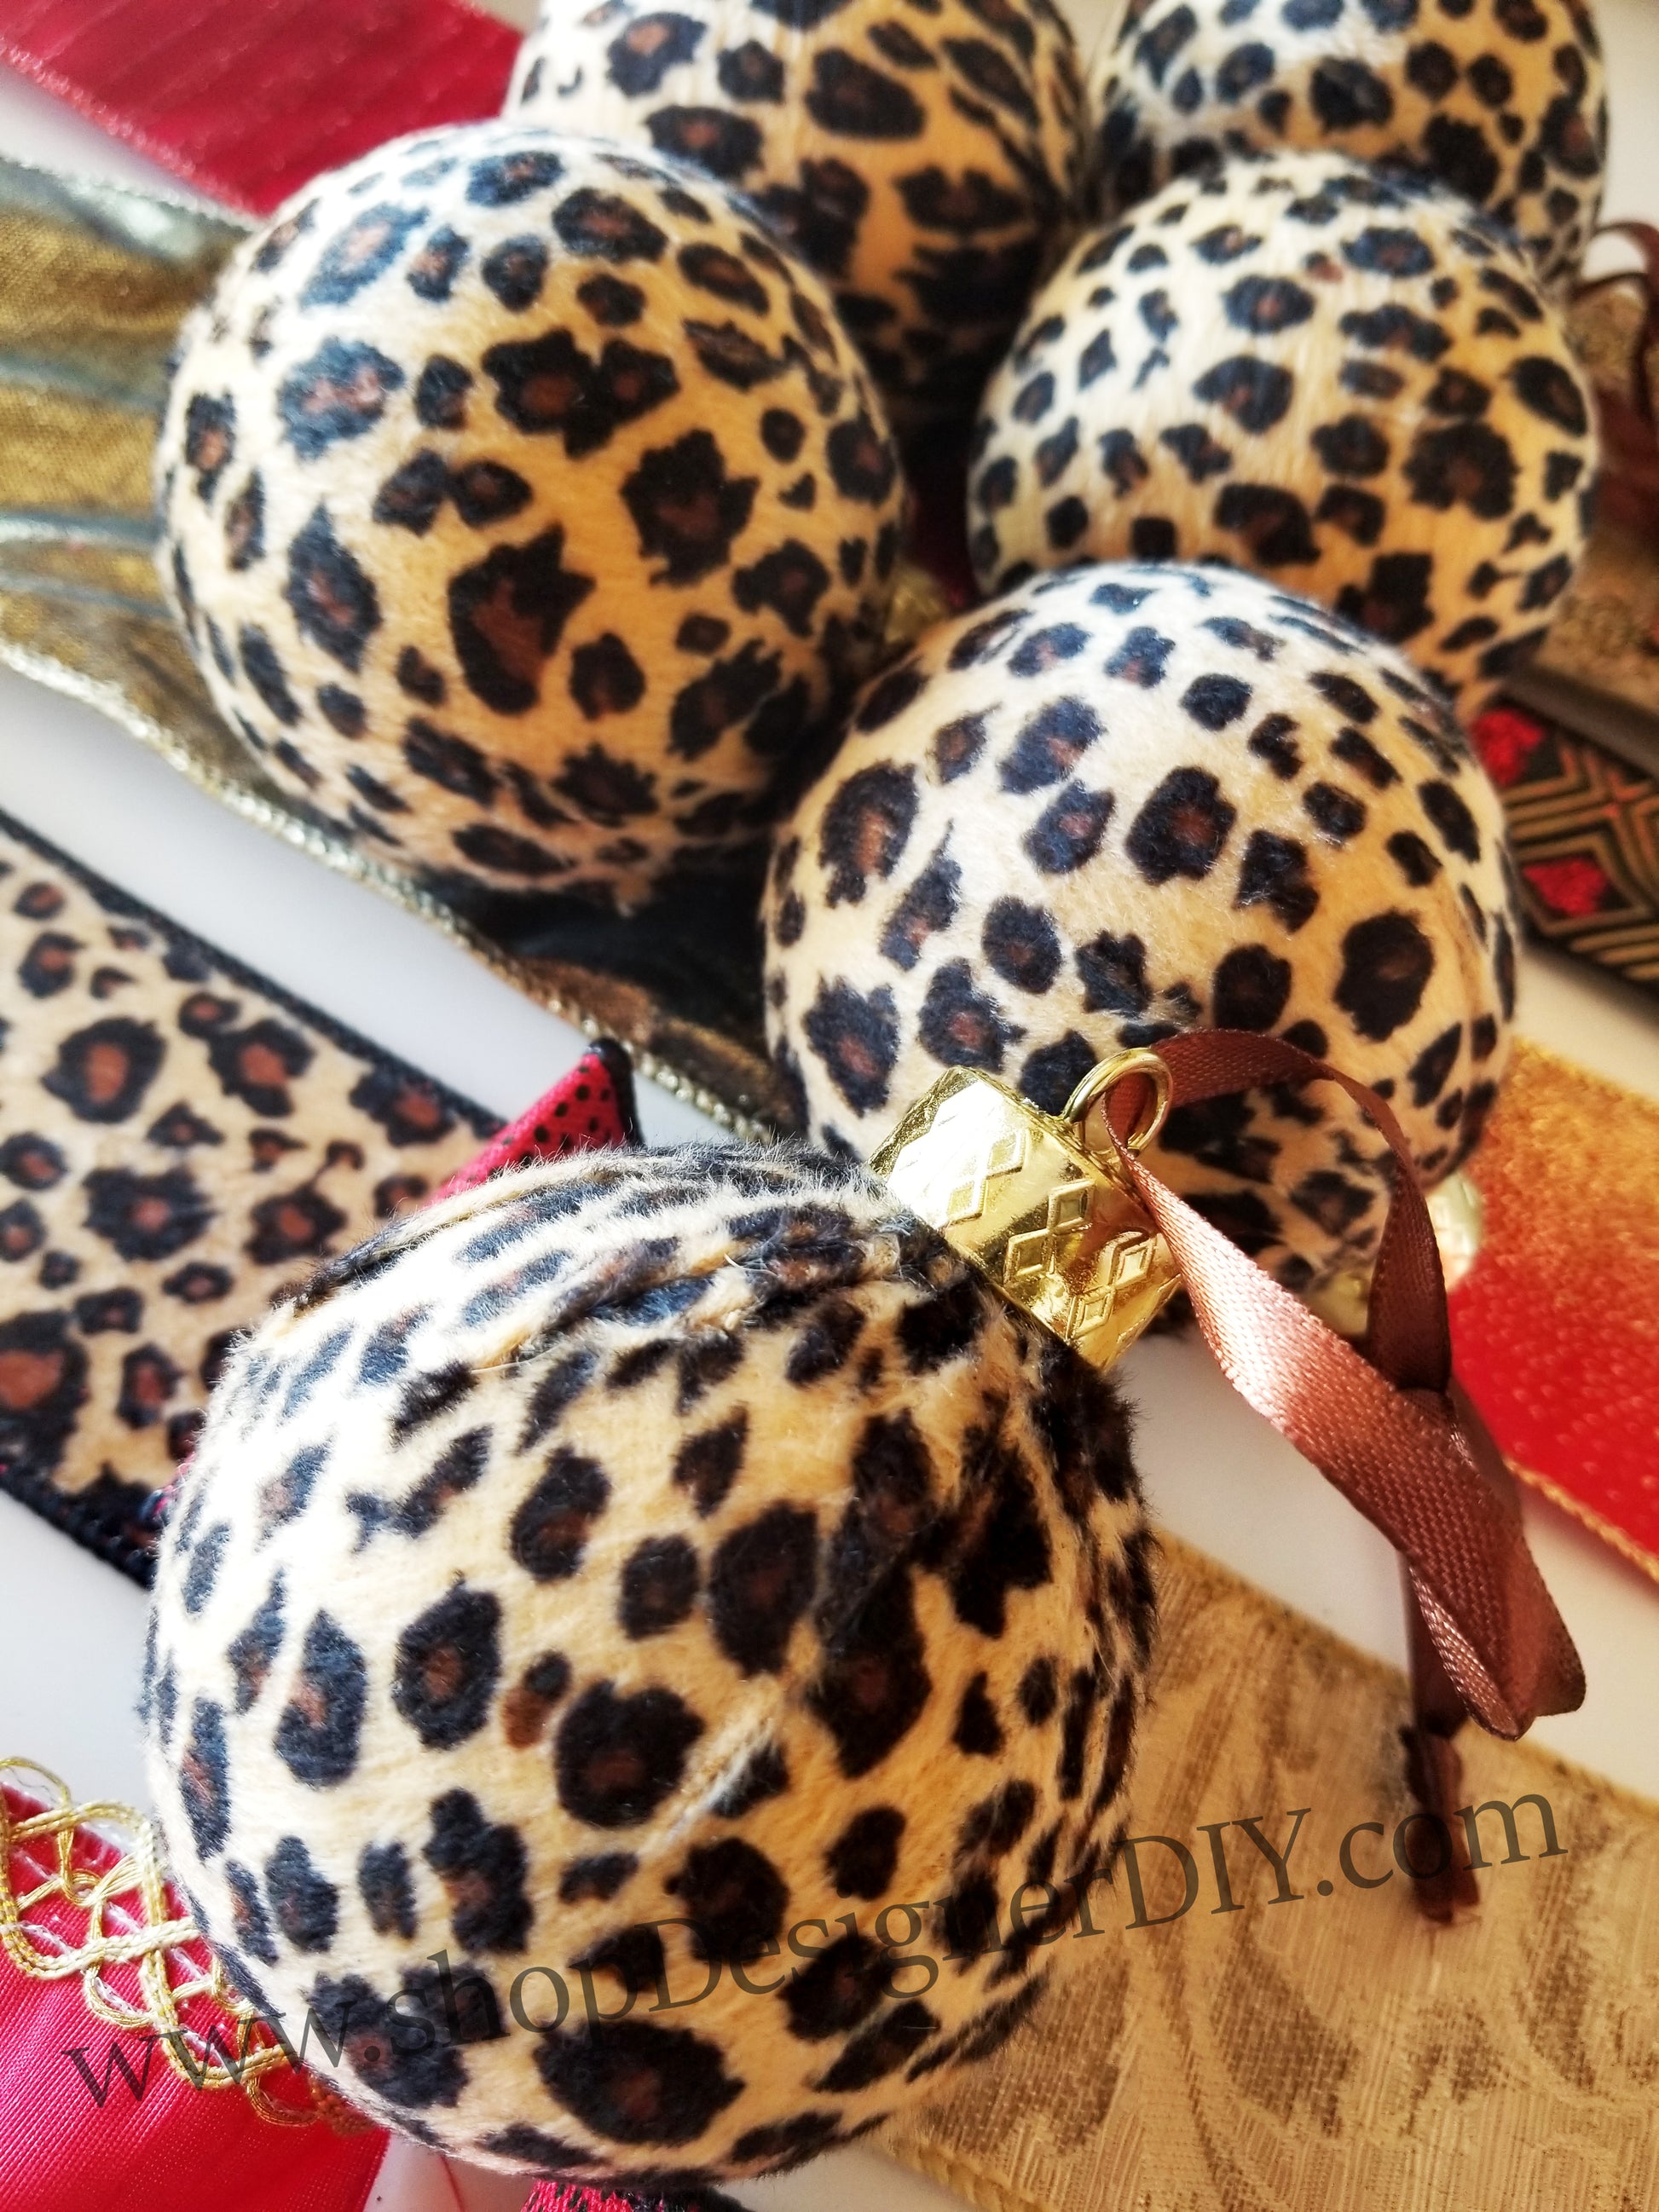 Leopard Valentine DIY Wreath Kit - Designer DIY